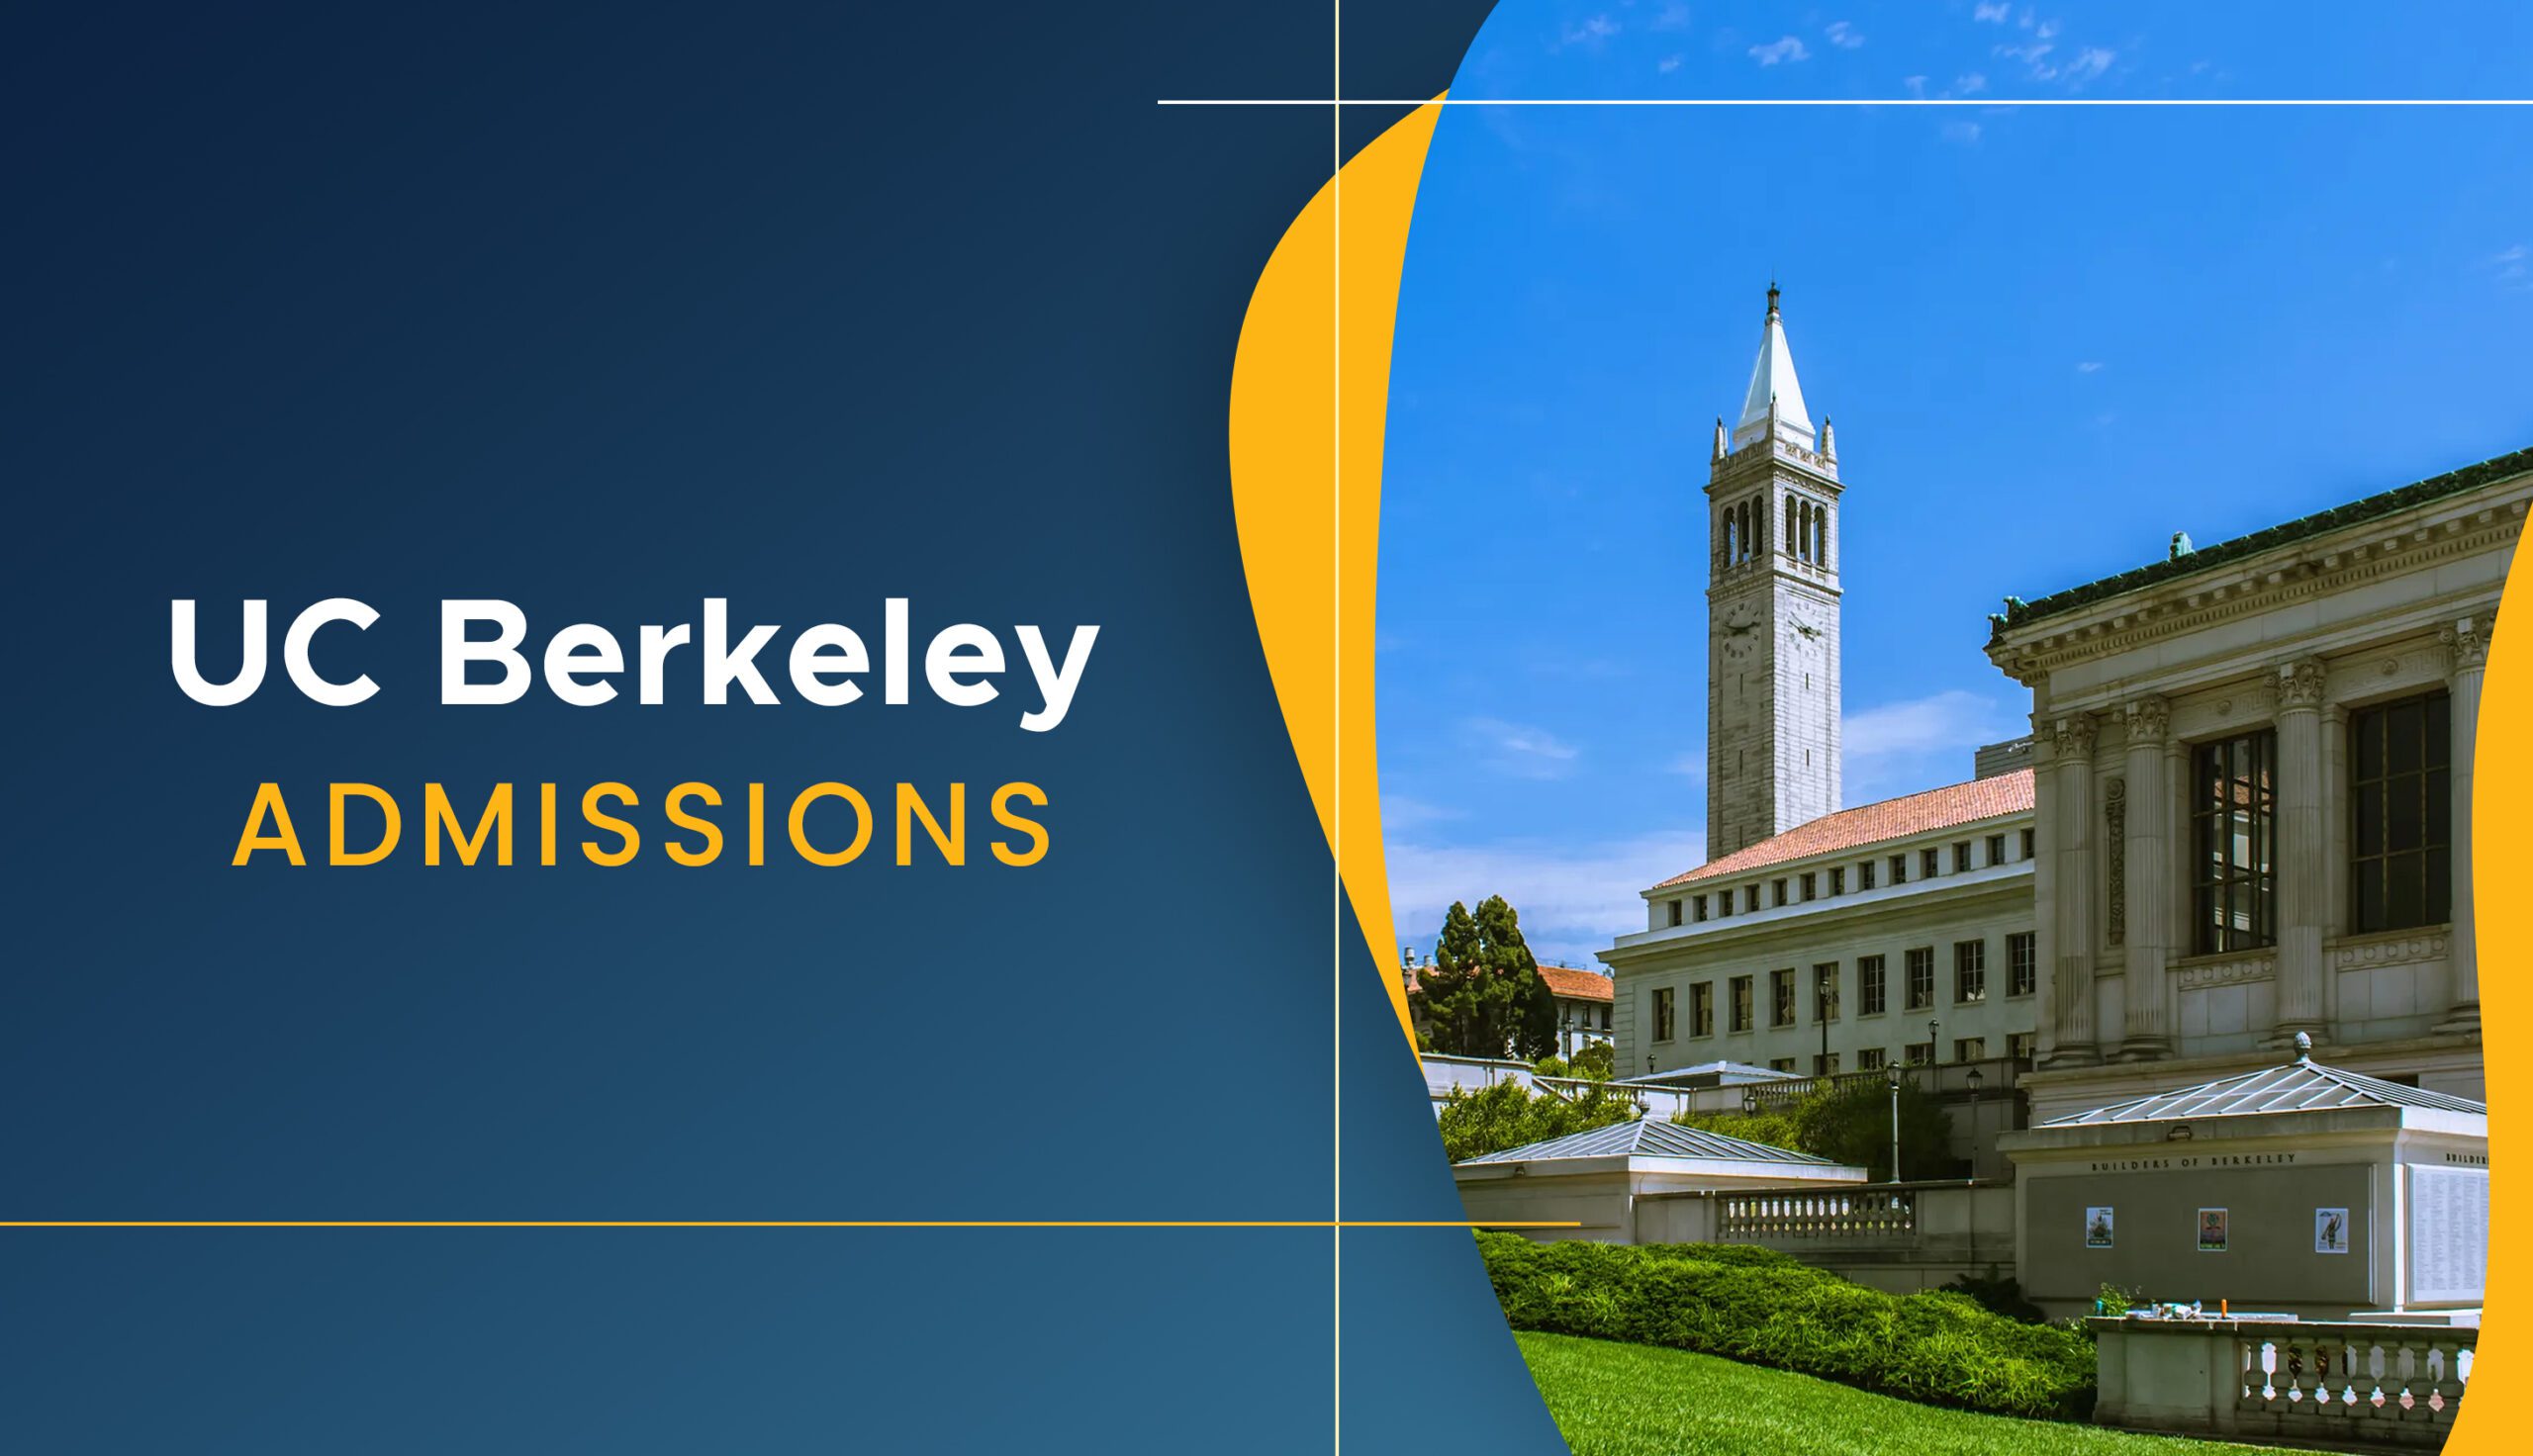 uc berkeley admissions essay